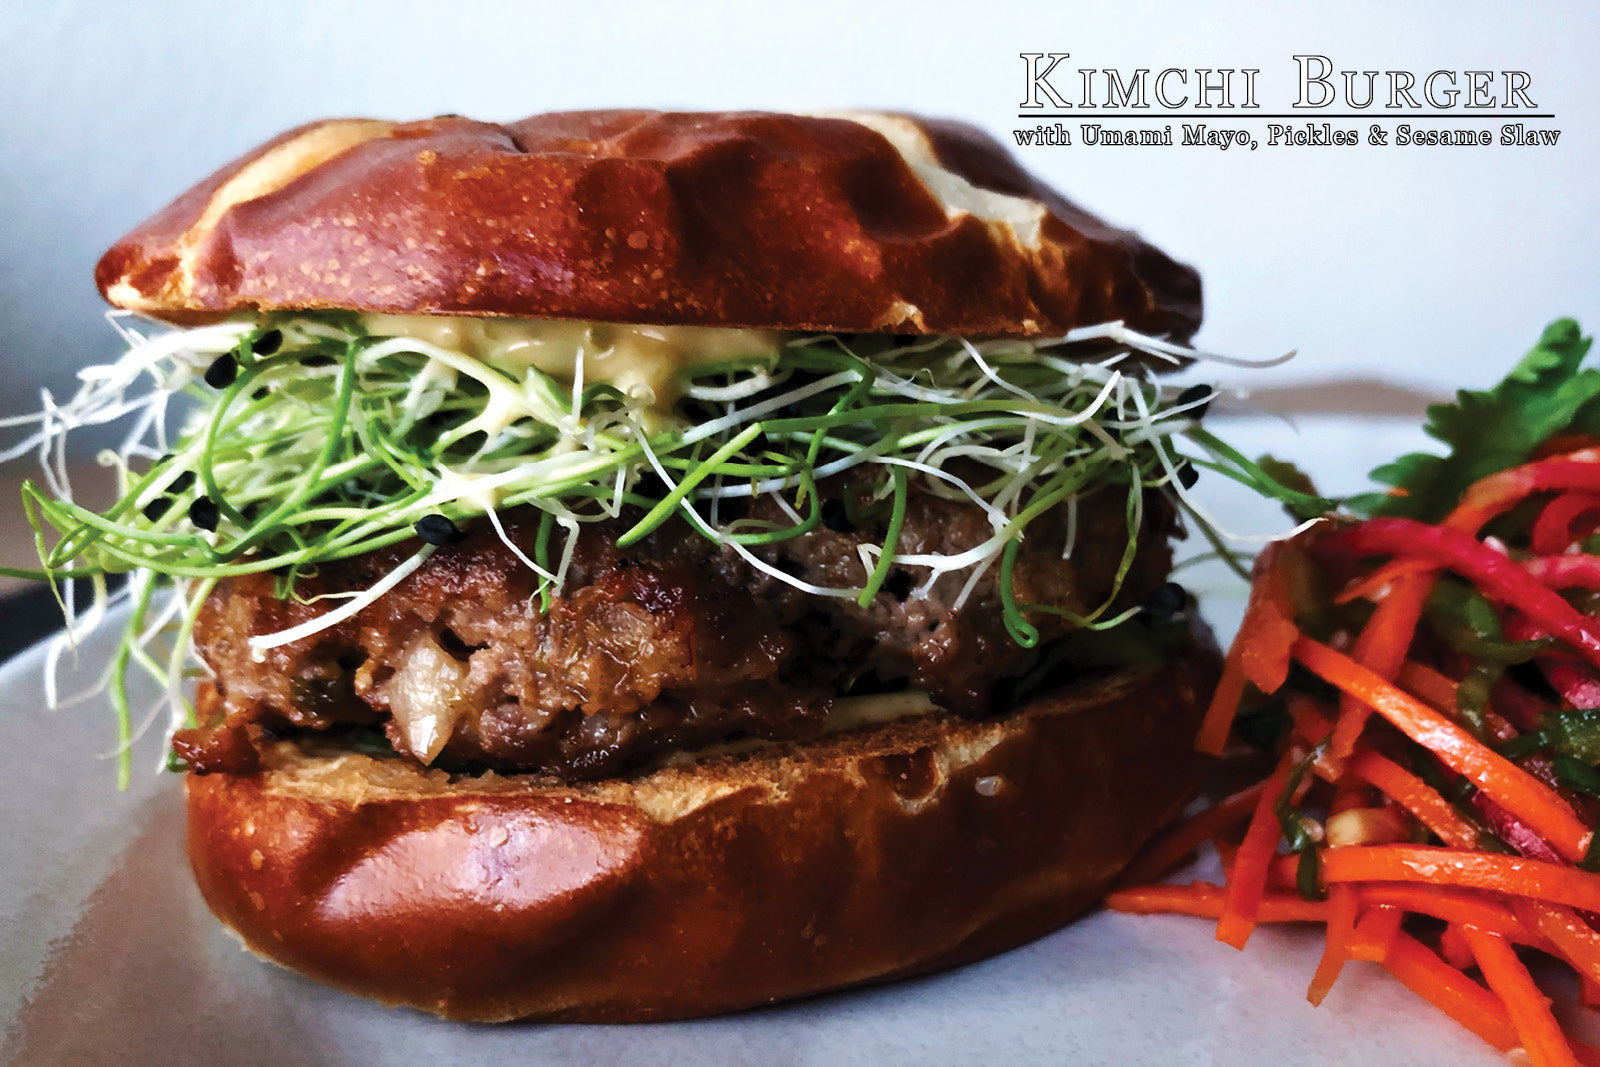 Kimchi Burger with Umami Mayo, Pickles & Sesame Slaw